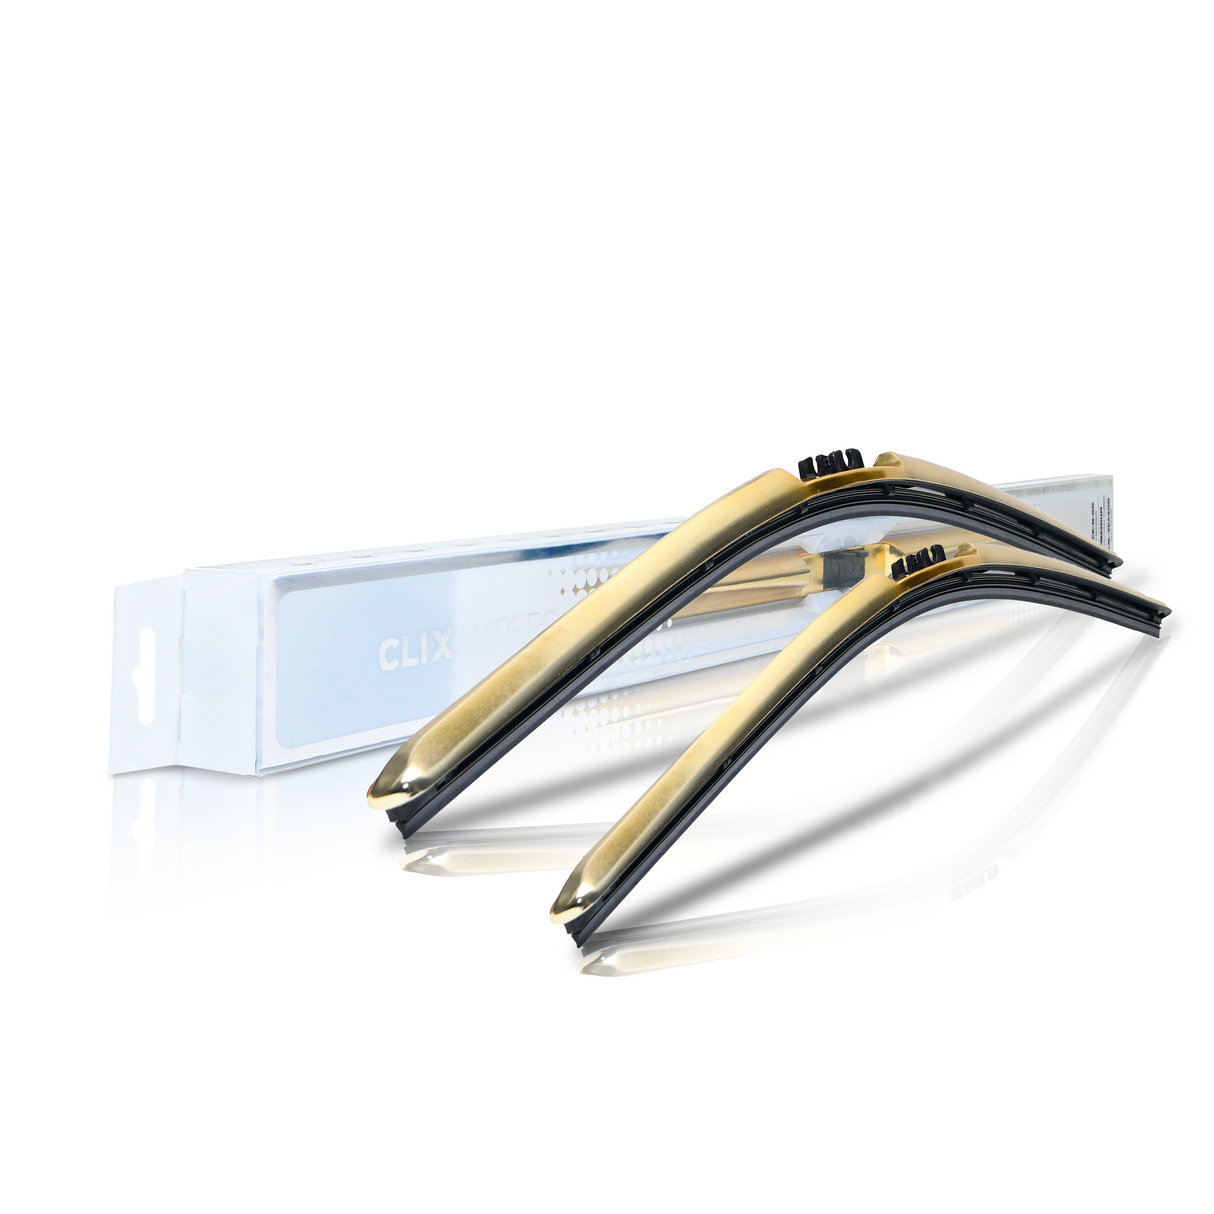 Infiniti QX56 Windshield Wiper Blades - ClixAuto